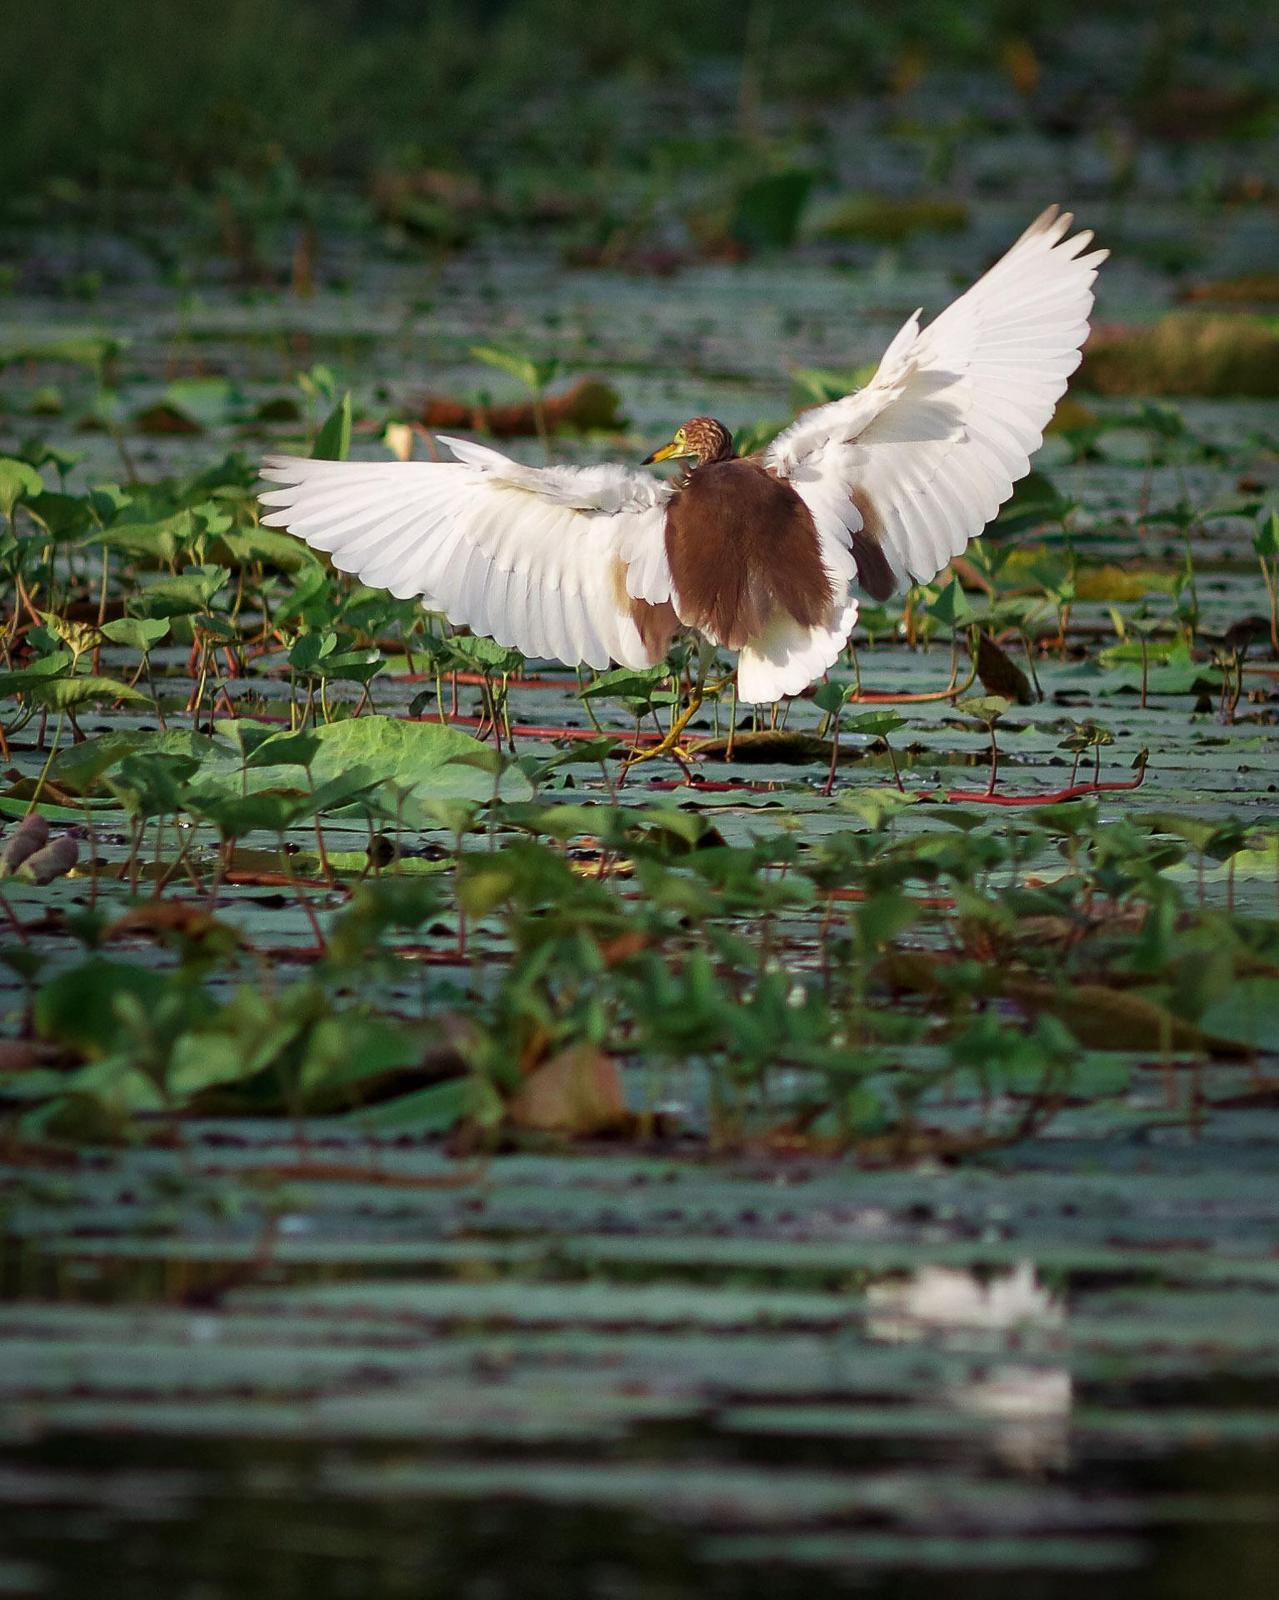 Chinese Pond-Heron Photo by Alan Fieldus